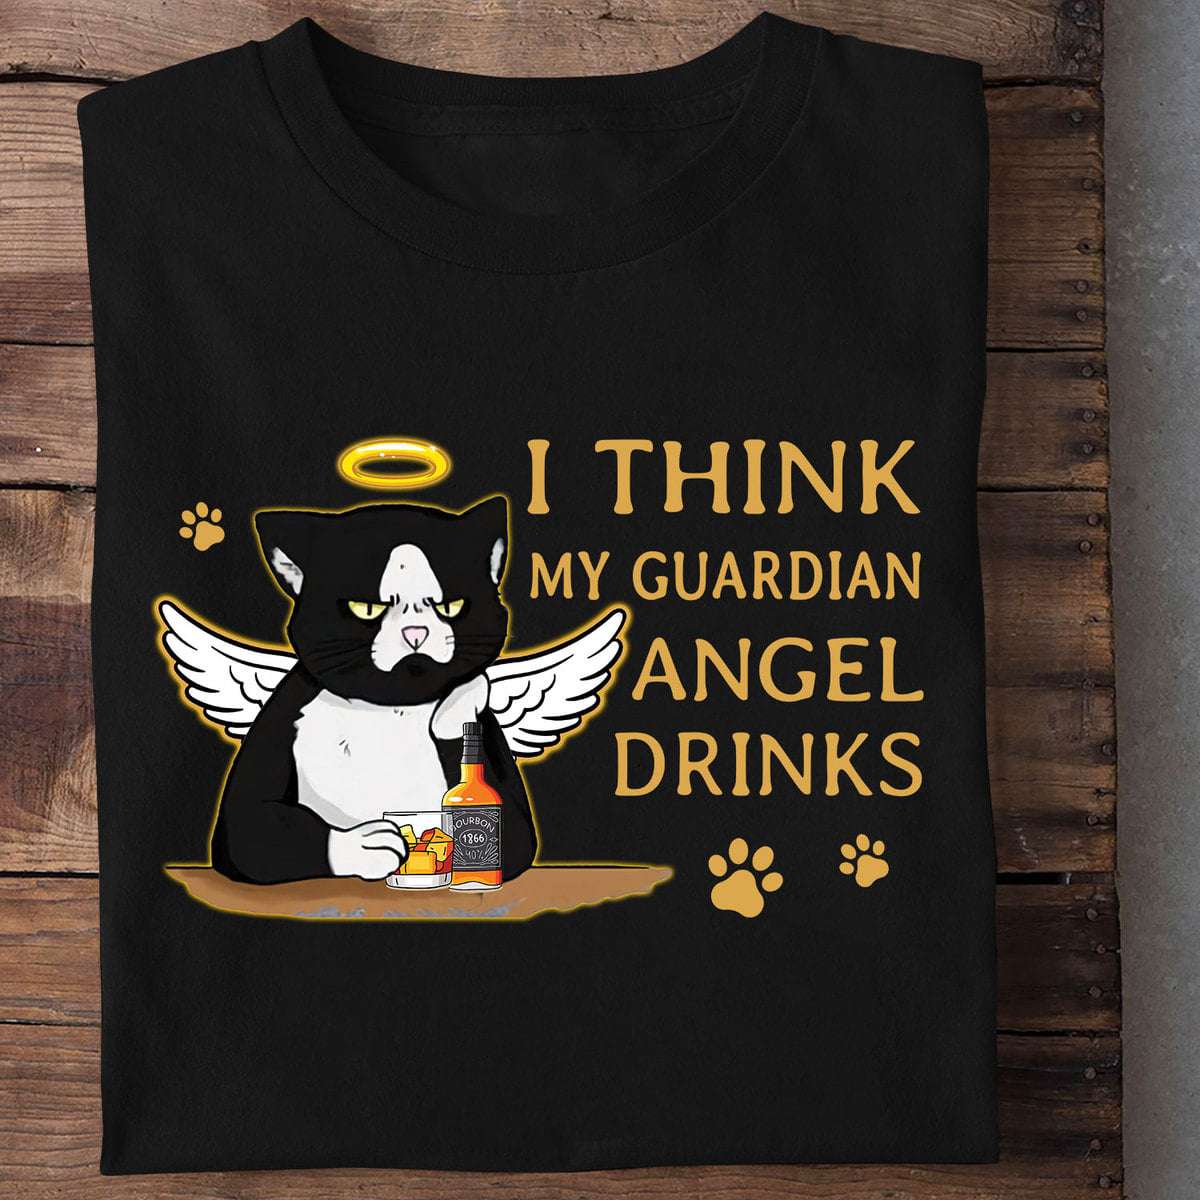 I think my guardian angel drinks - Black cat angel, cat and wine